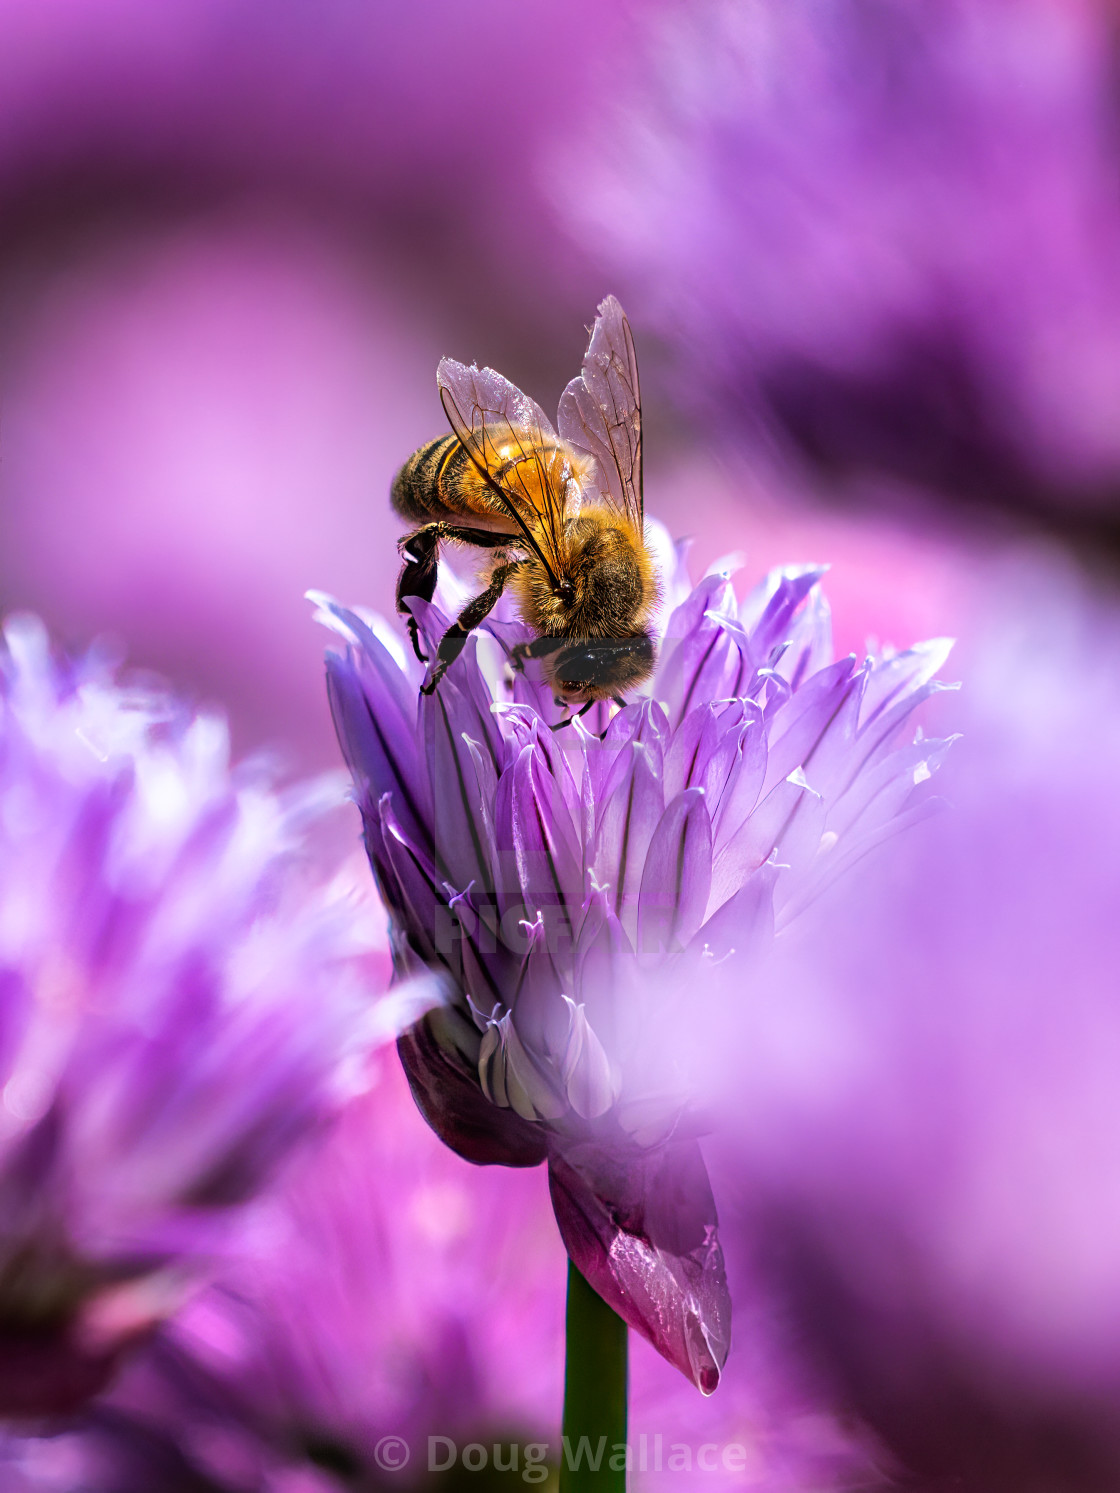 "Honey Bee collecting pollen." stock image